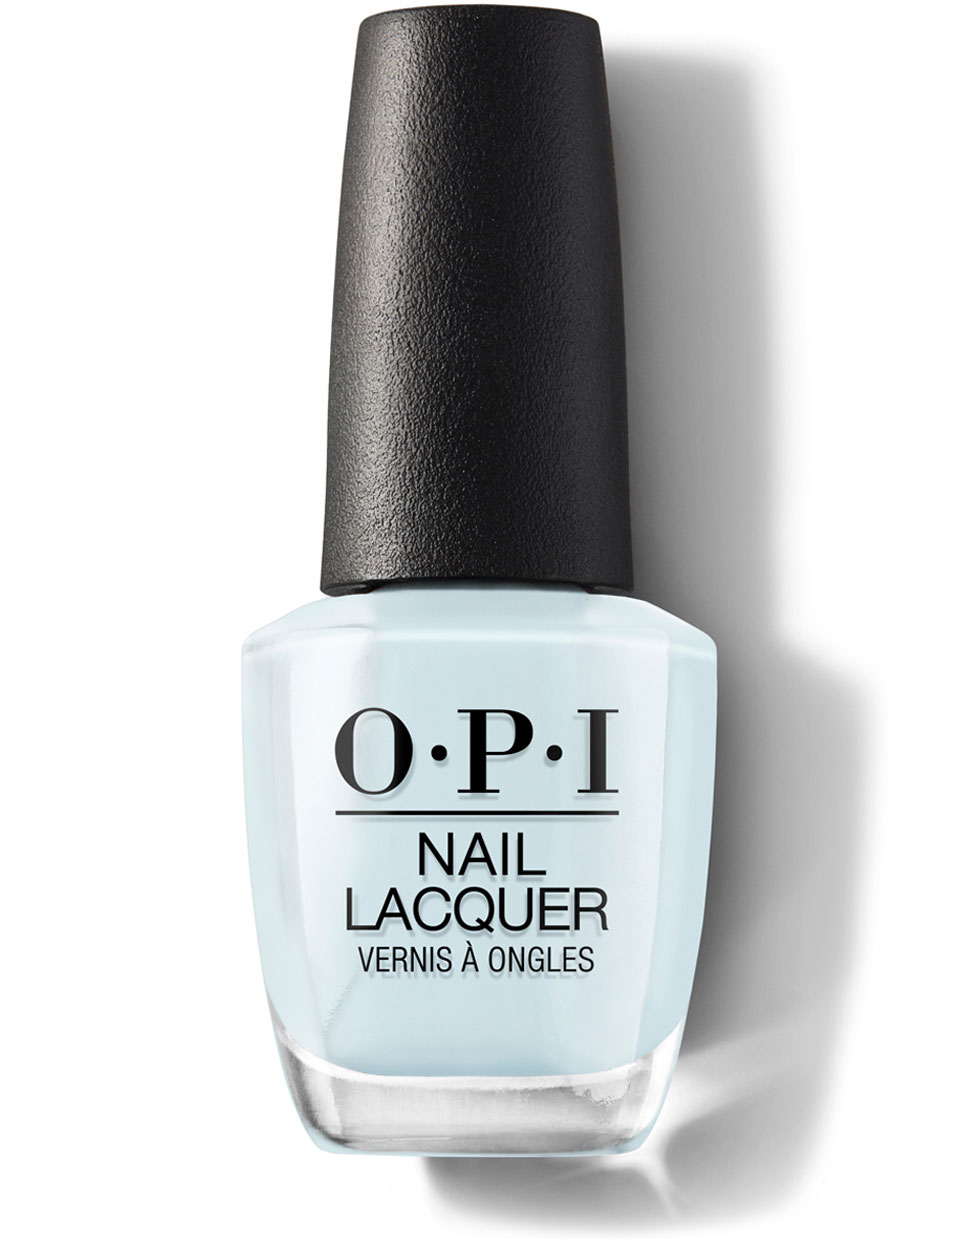 It's a Boy! - Nail Lacquer | OPI summer nail color